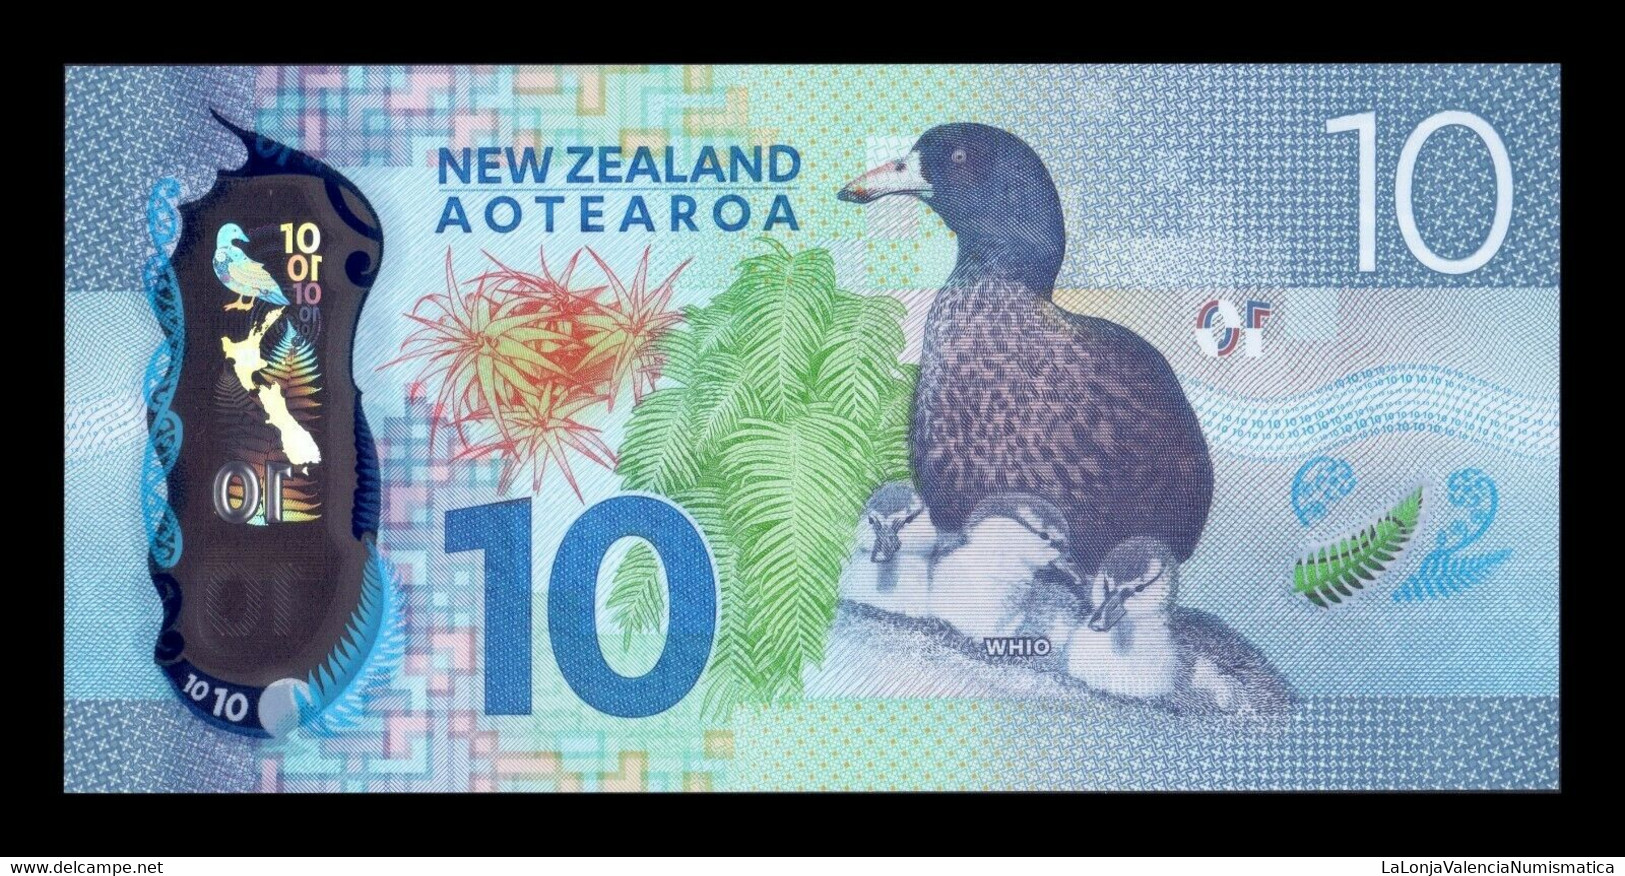 Nueva Zelanda New Zealand 10 Dollars 2015 Pick 192 Polymer SC UNC - Neuseeland